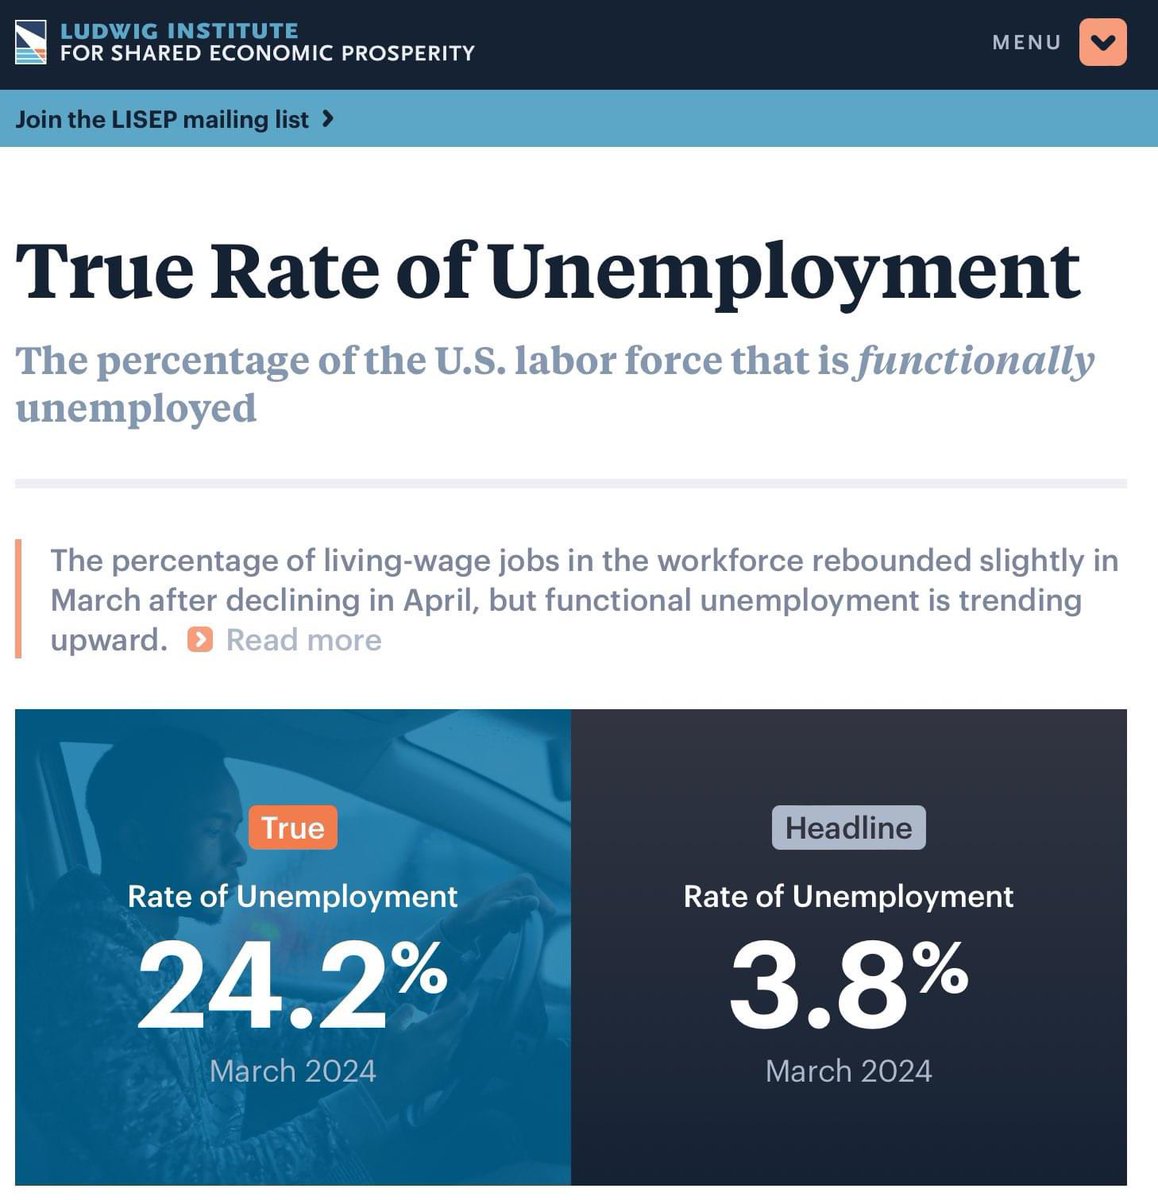 True unemployment rate: 

24.2%